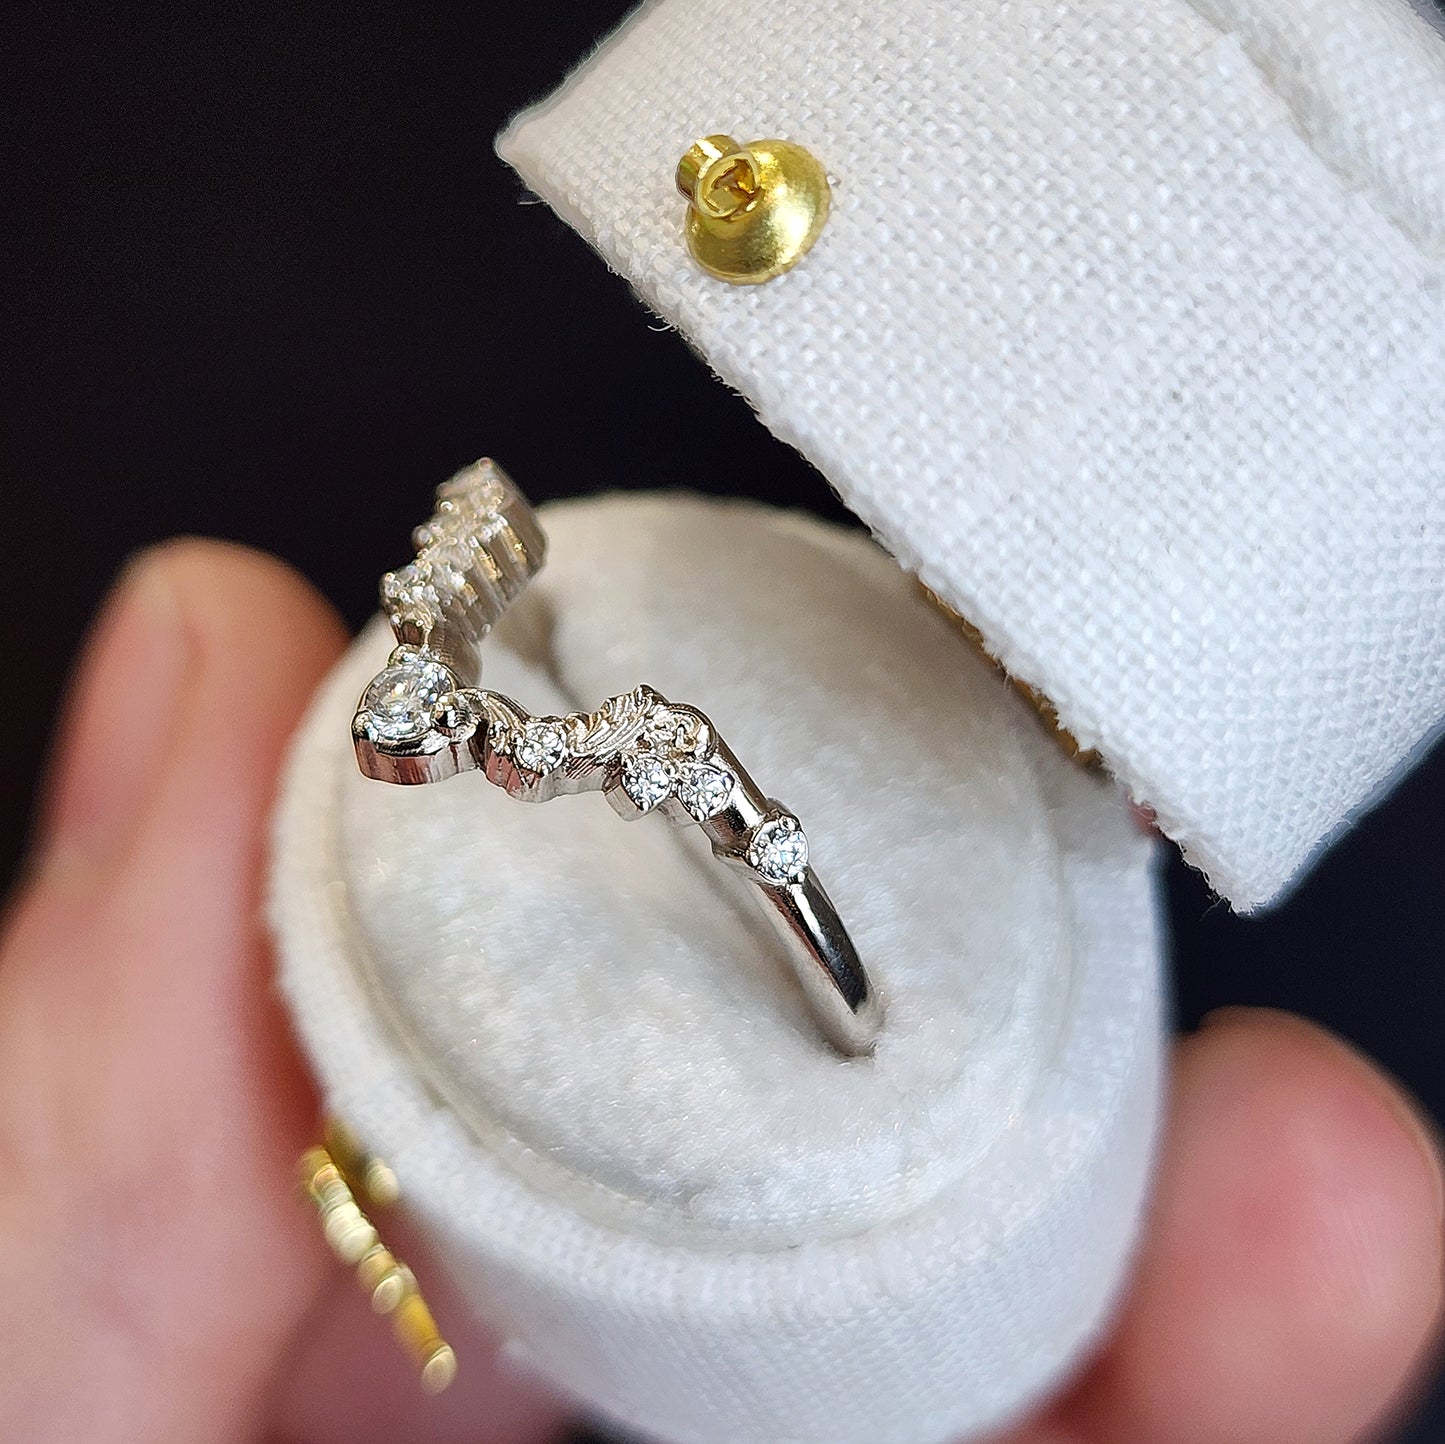 Odette Diamond Wedding Band 14k Gold Fine Jewelry - Dainty Tiny Diamond Stacking Filigree Ring